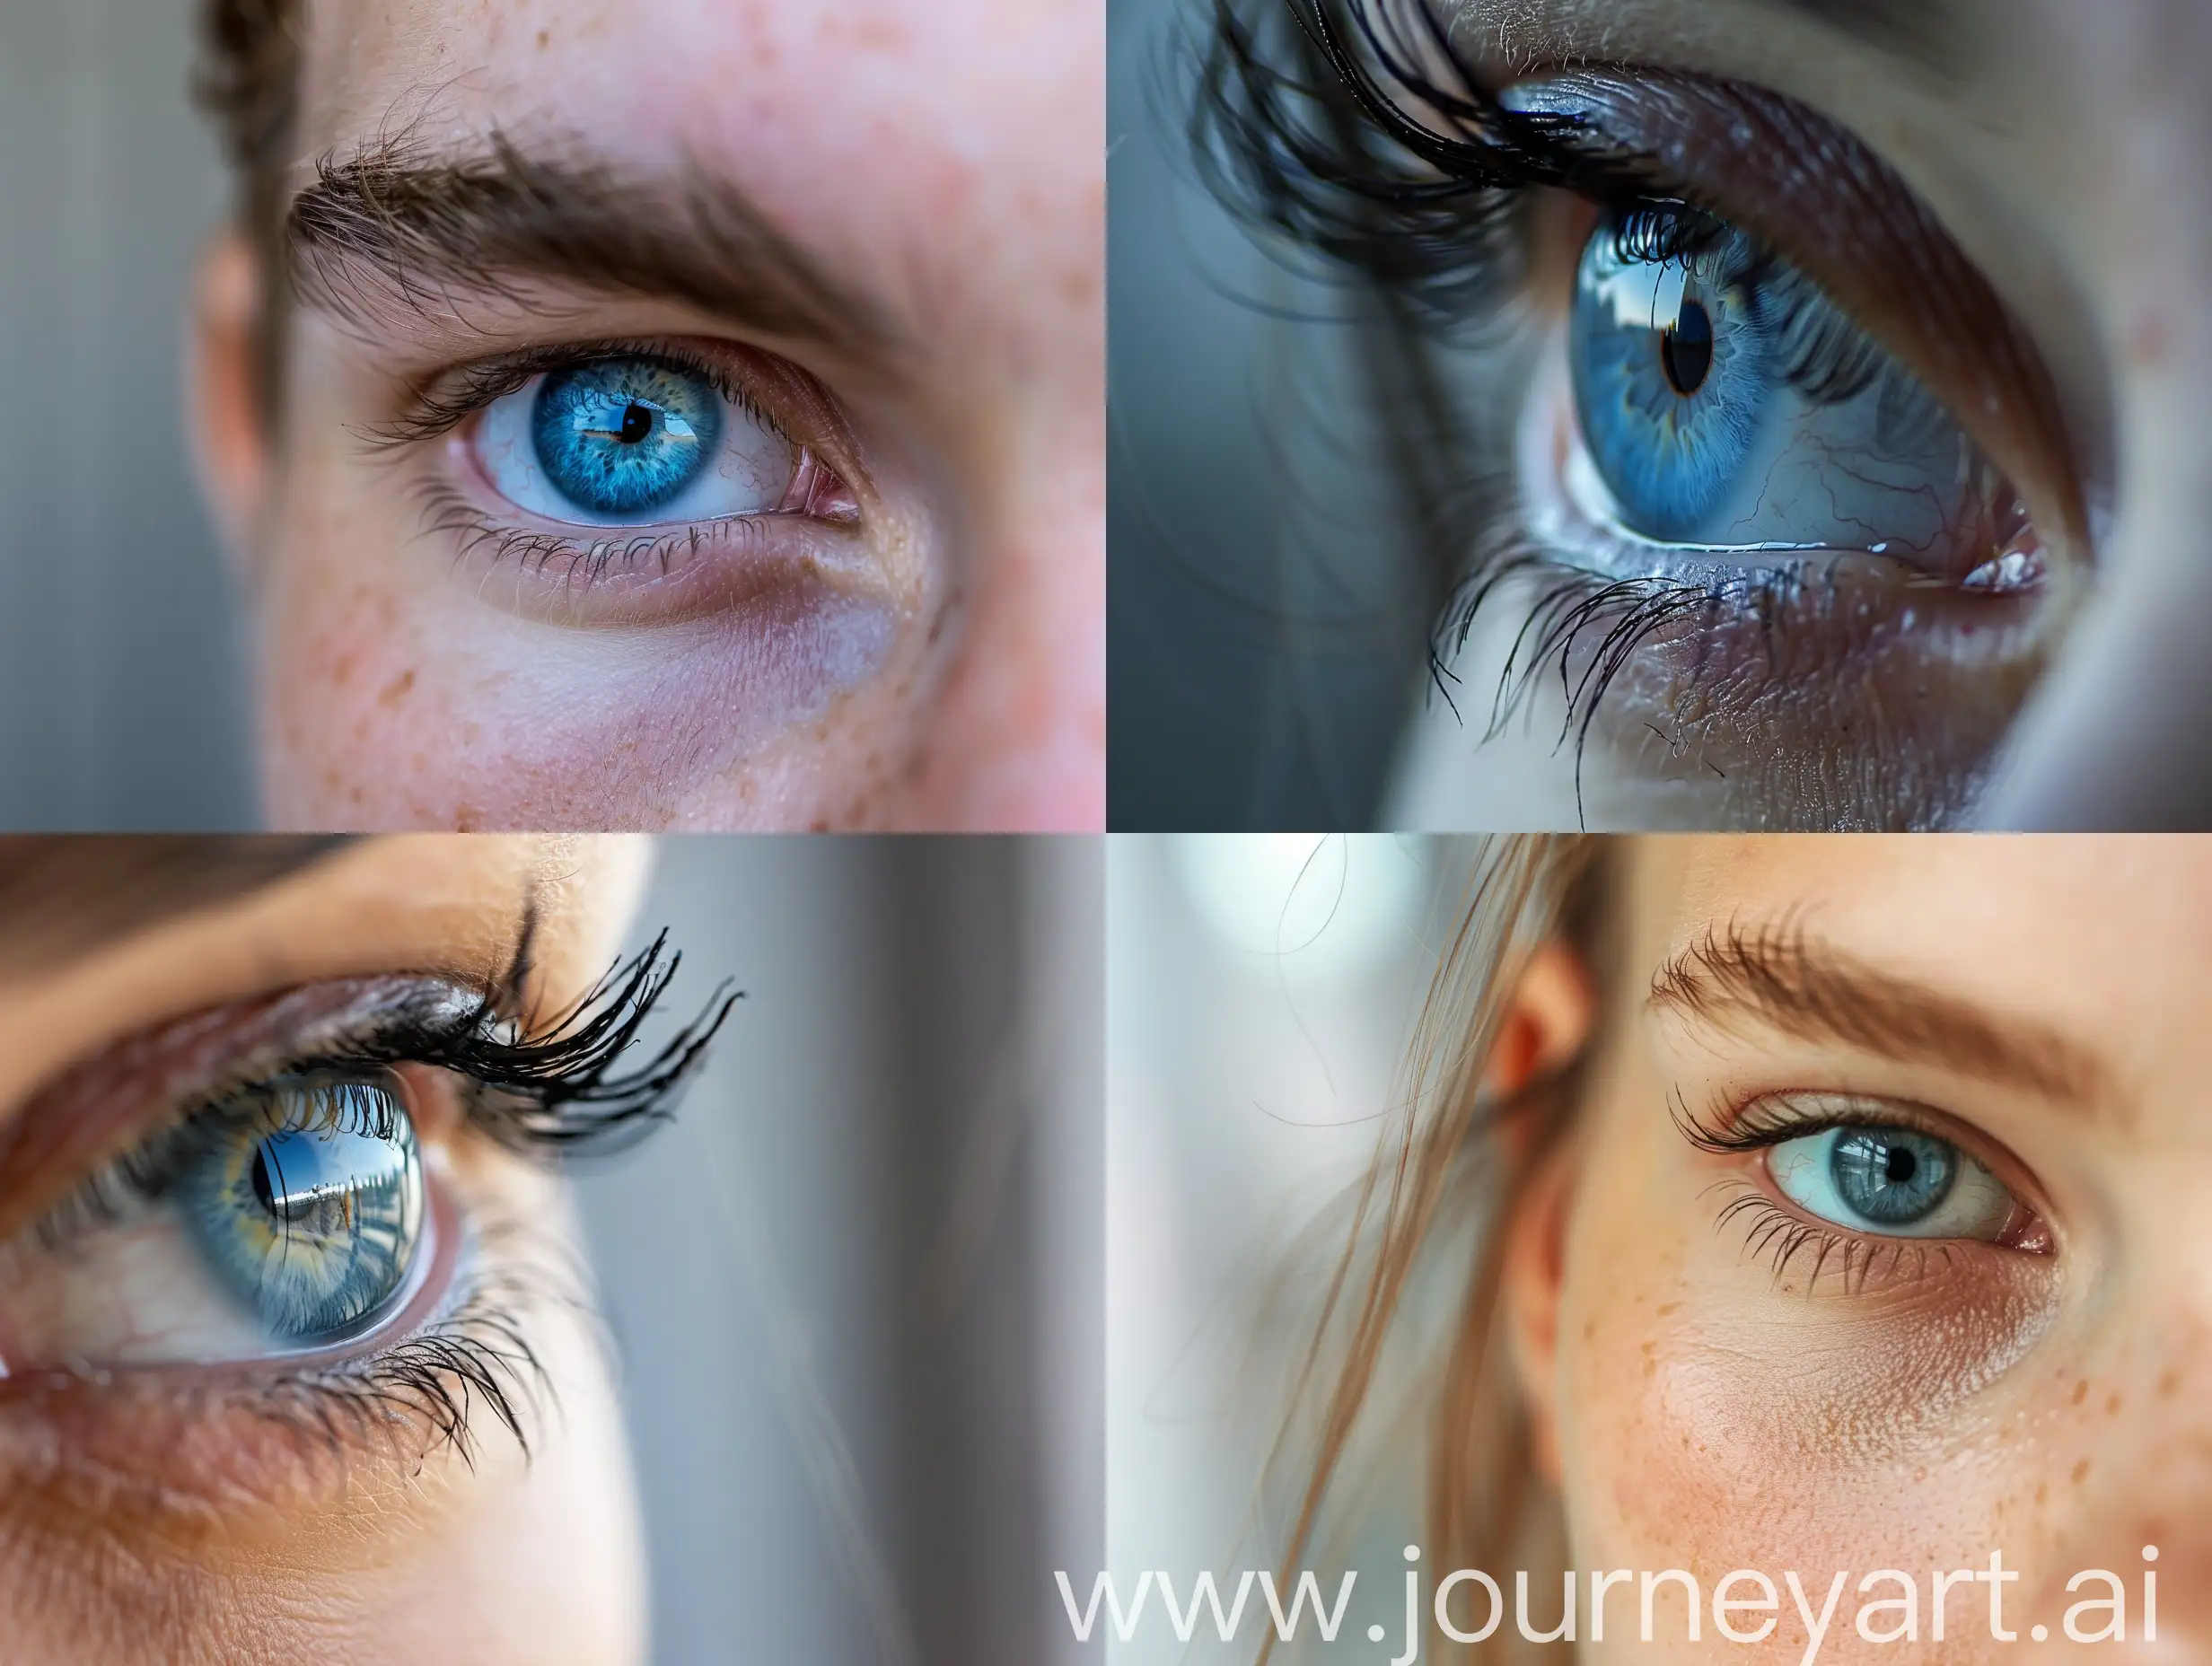 Intense-Blue-Eye-CloseUp-Captivating-Gaze-in-Foreground